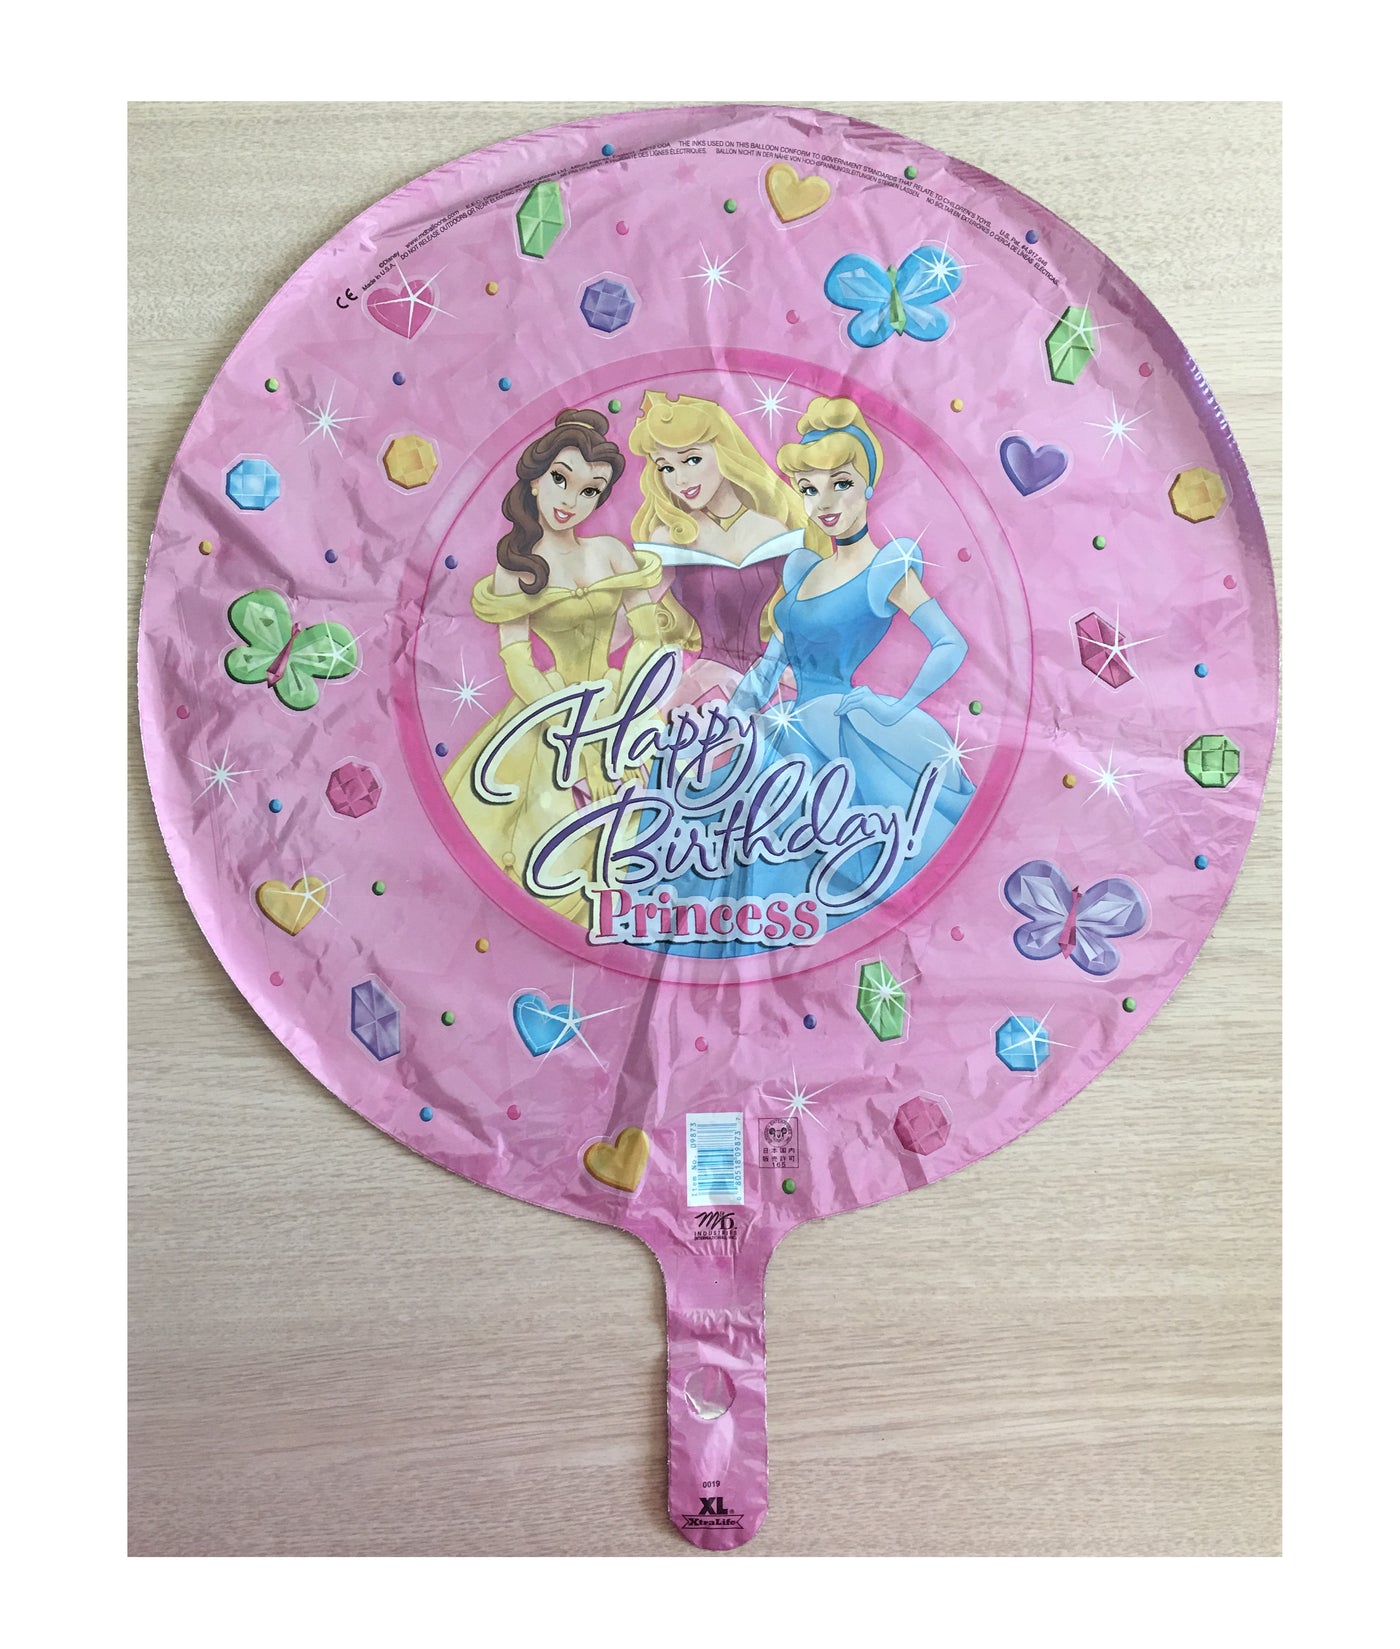 49pcs Disney Princess Aurora Foil Balloon Set 40inch Pink Number